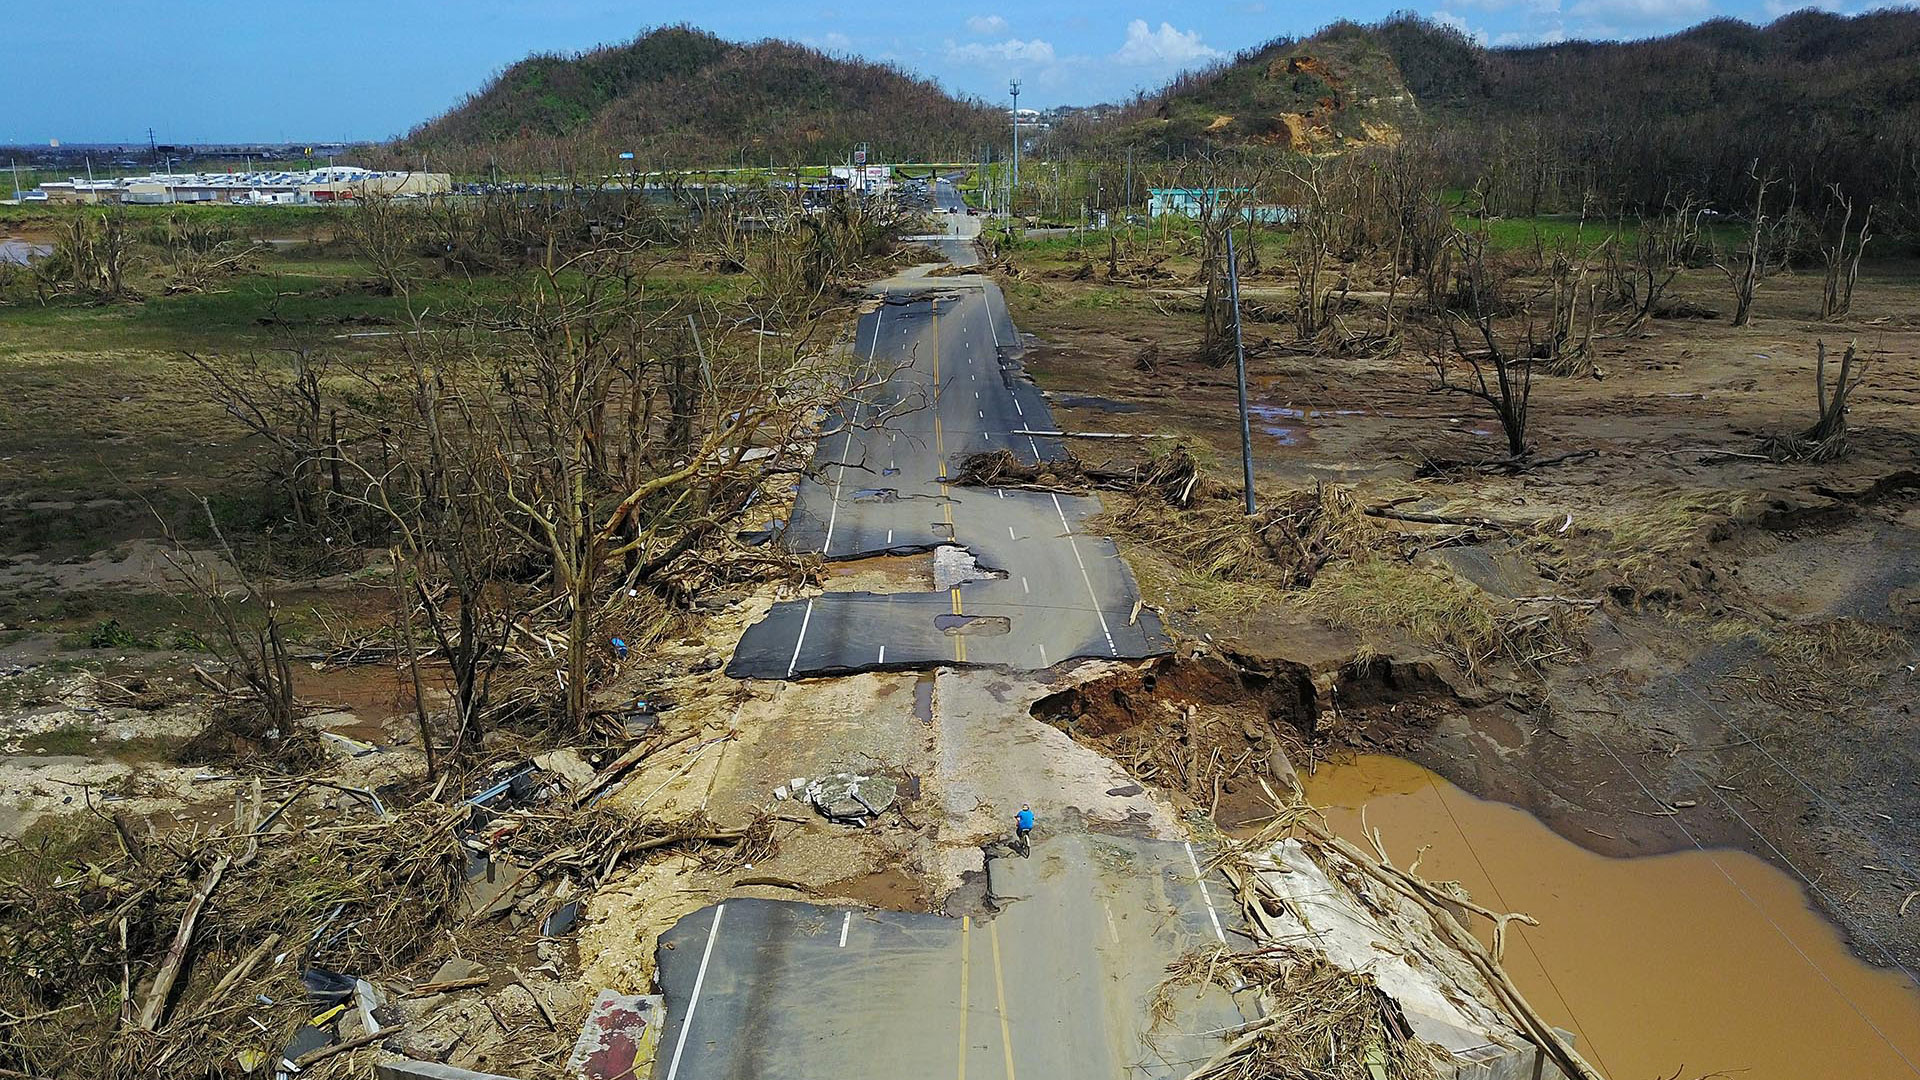 Destinan 100 millones dólares para municipios de Puerto Rico afectados por el huracán María